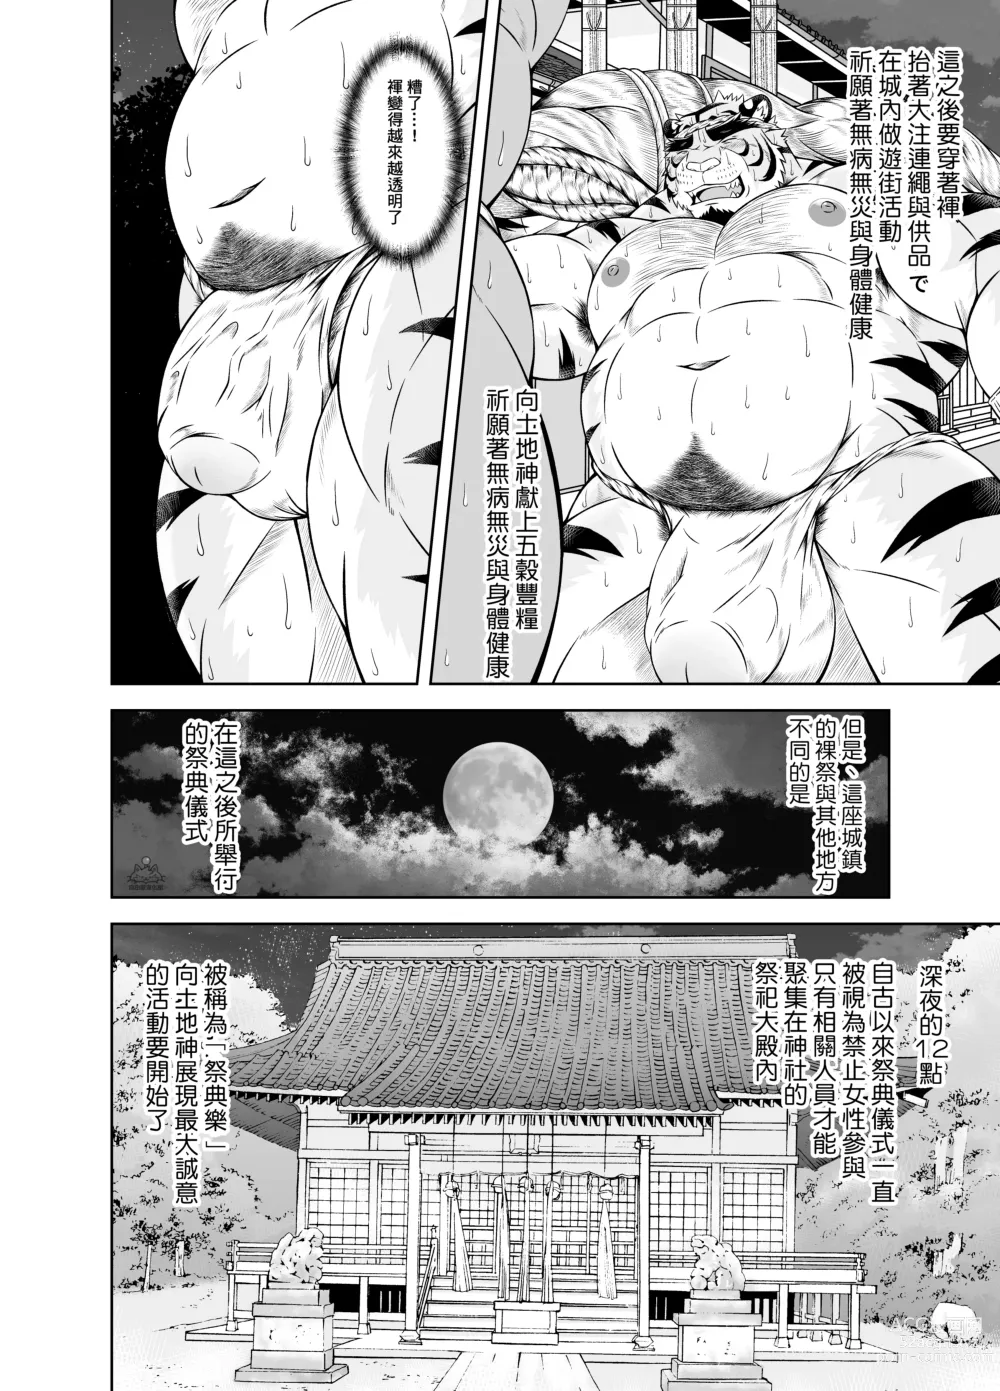 Page 9 of doujinshi 最後的祭典樂